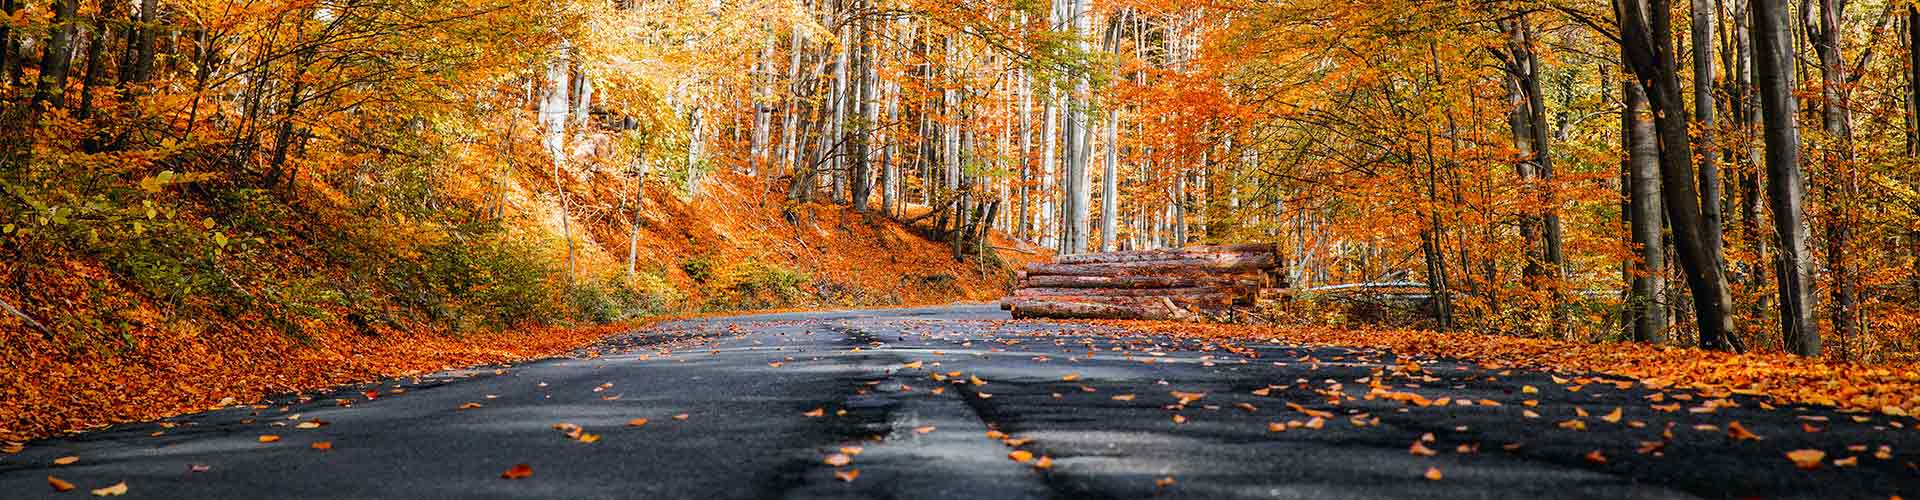 Autumn country road through trees